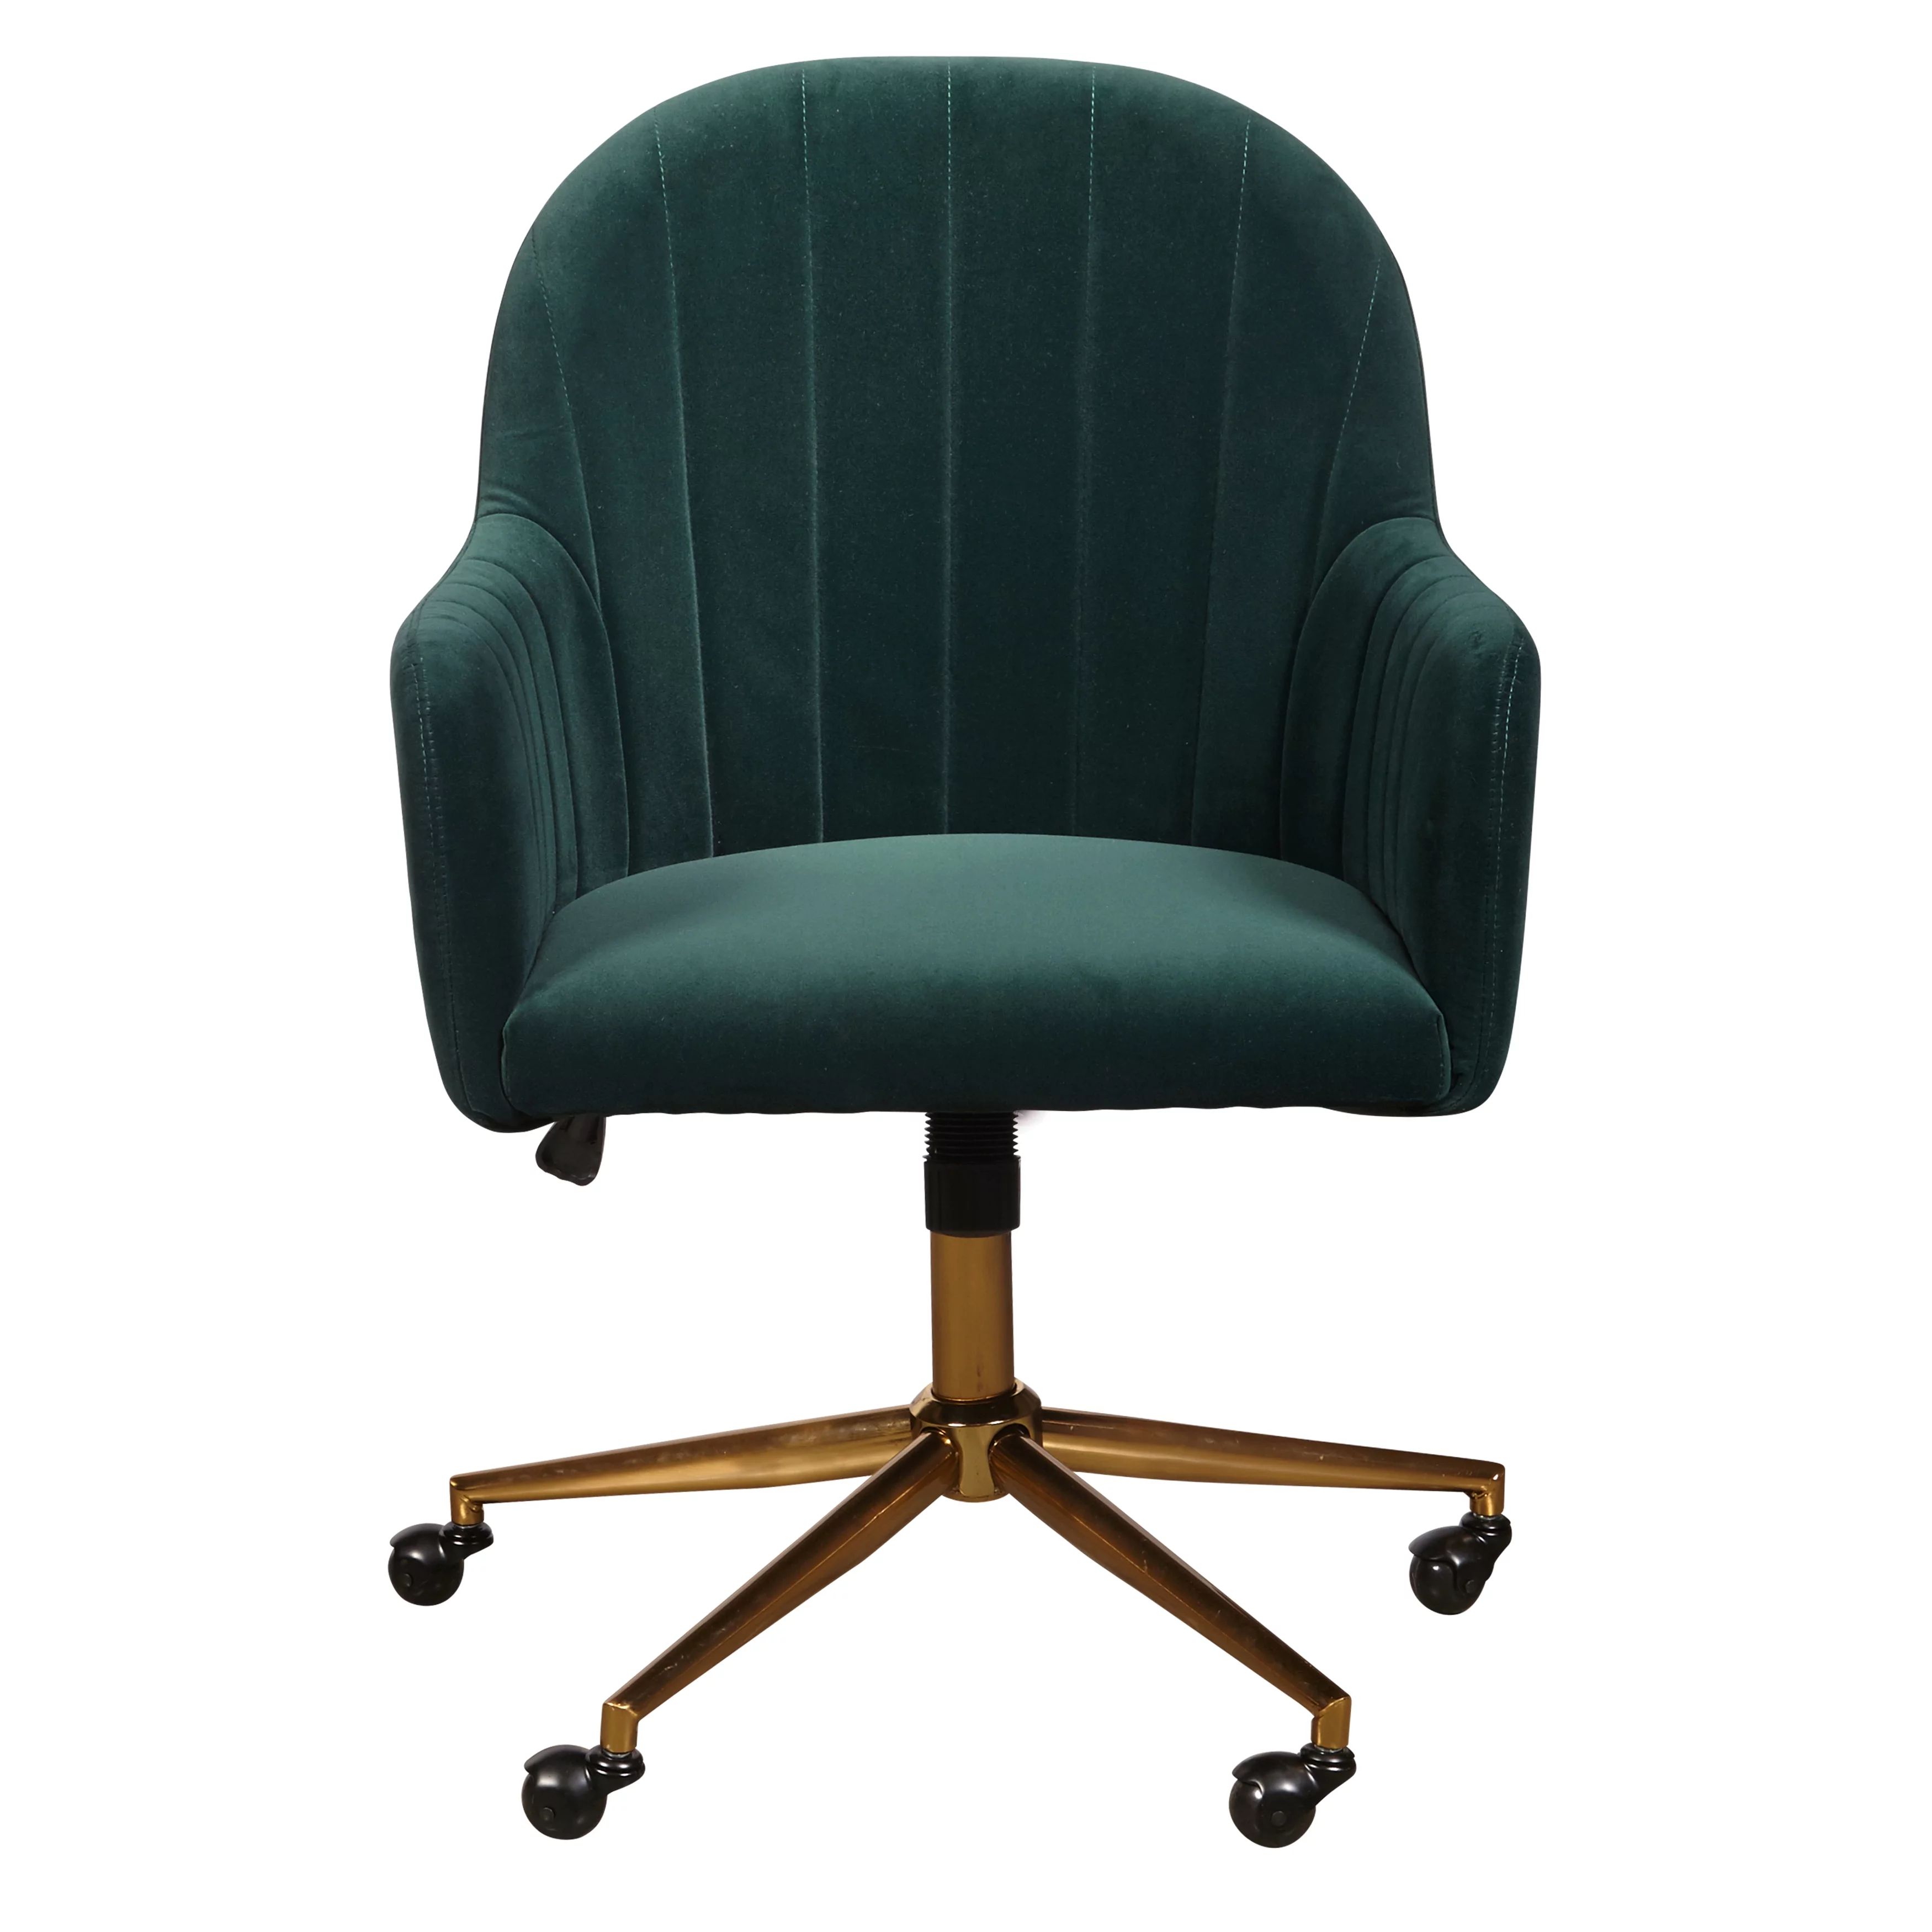 Upholstered Channel Tufted Office Chair in Emerald Green Velvet | Walmart (US)